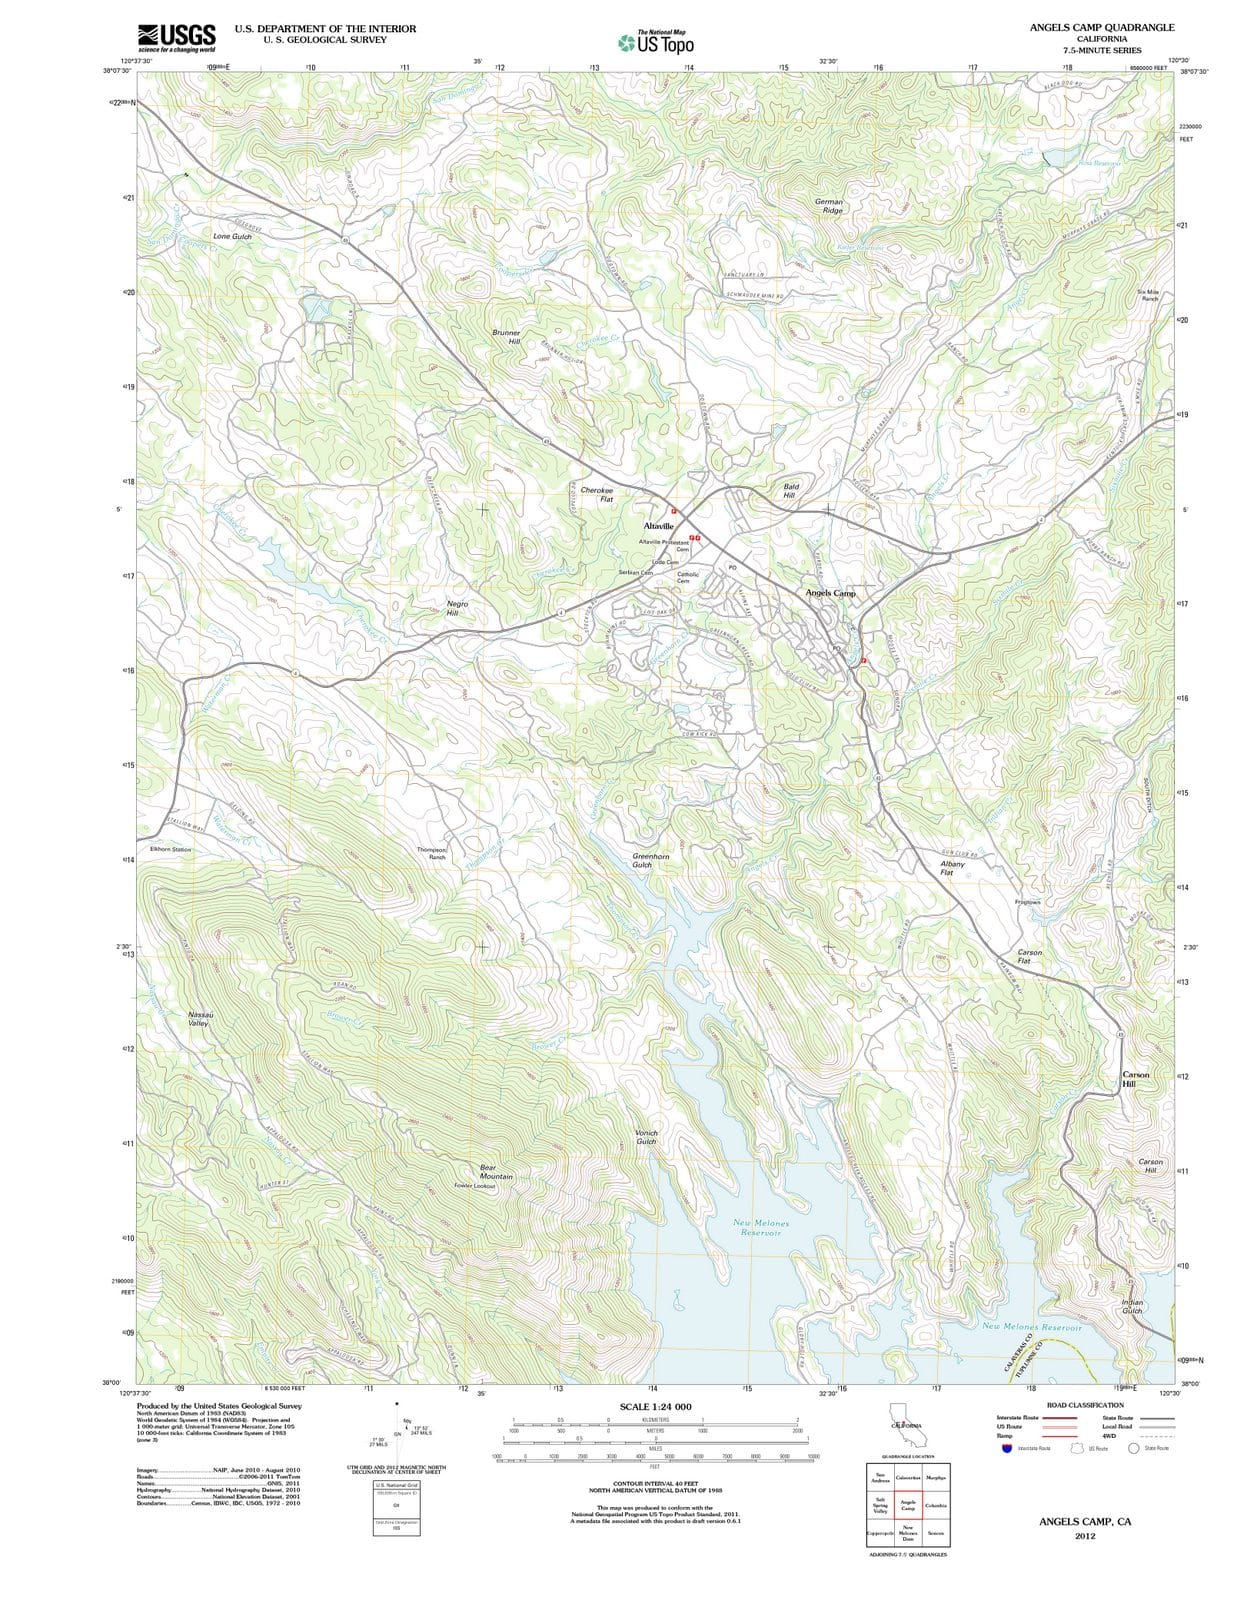 2012 Angels Camp, CA - California - USGS Topographic Map